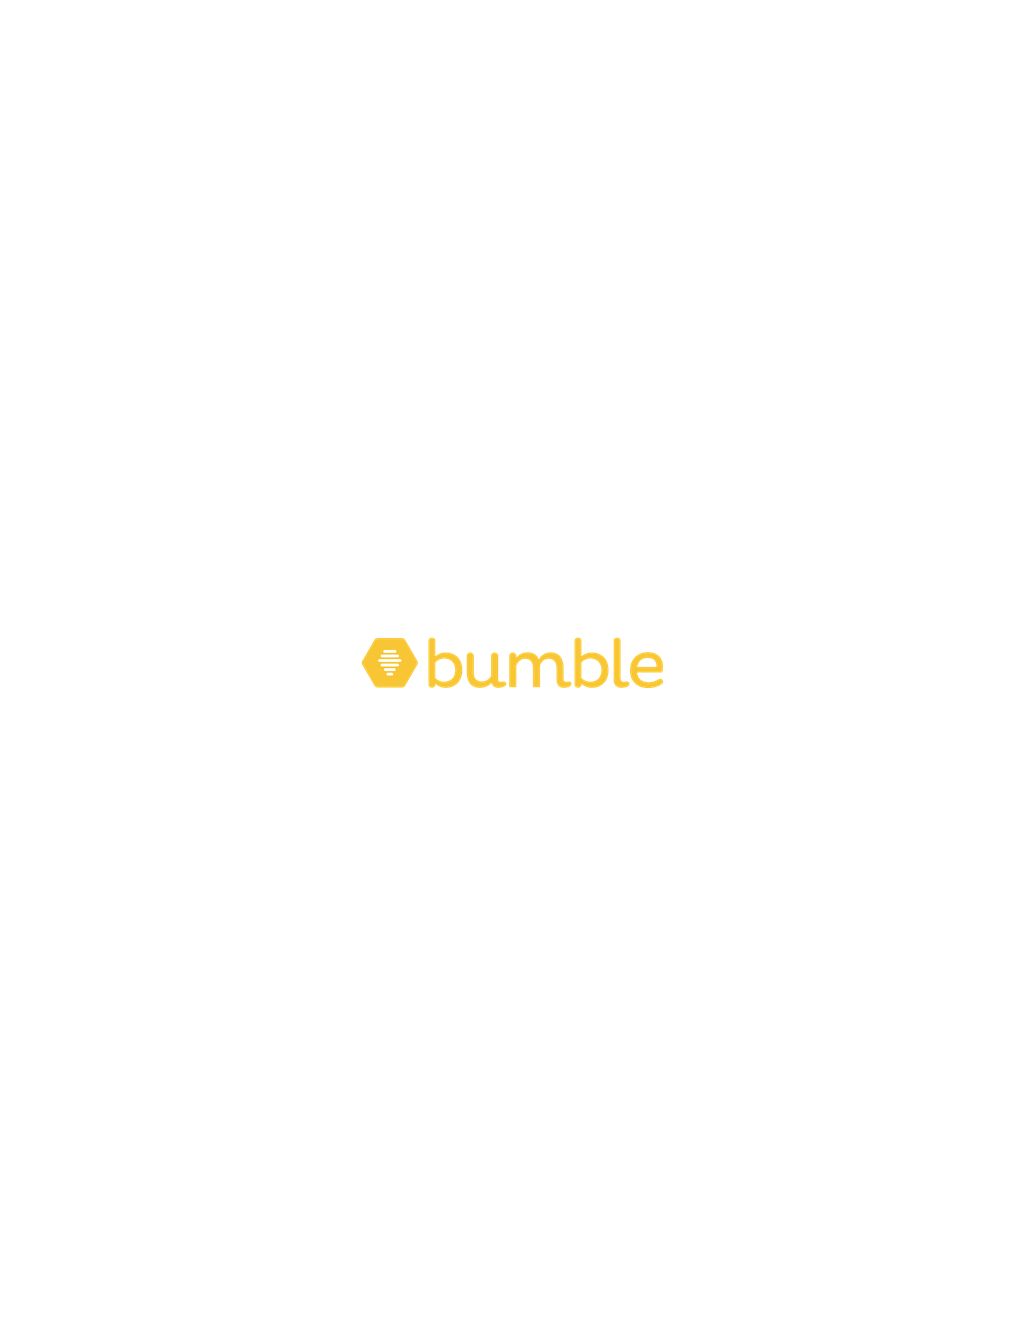 Bumble logotype, transparent .png, medium, large